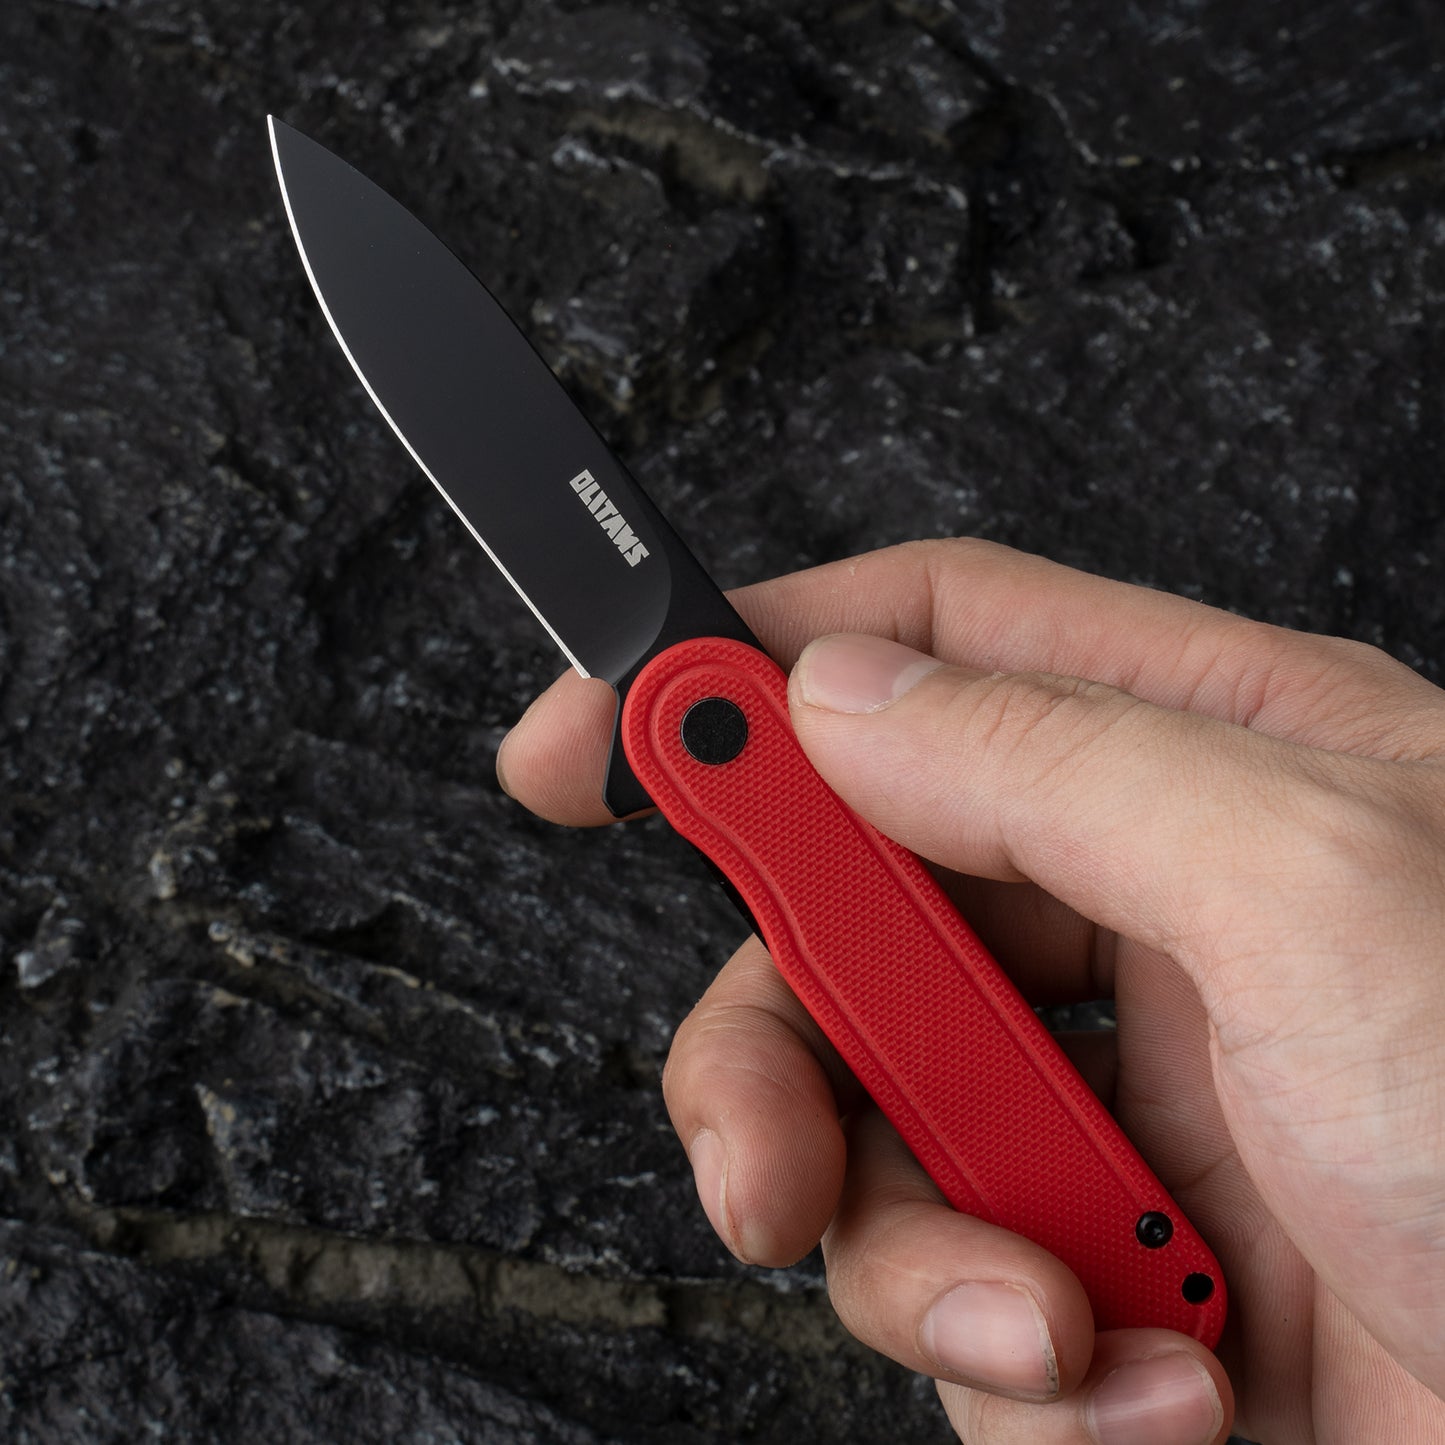 OLITANS G040 Pocket Knife , 2.75'' D2 Steel Blade G10 handle, Small EDC Knife with Pocket Clip for Men Women, Mini folding Camping knife  2.1oz